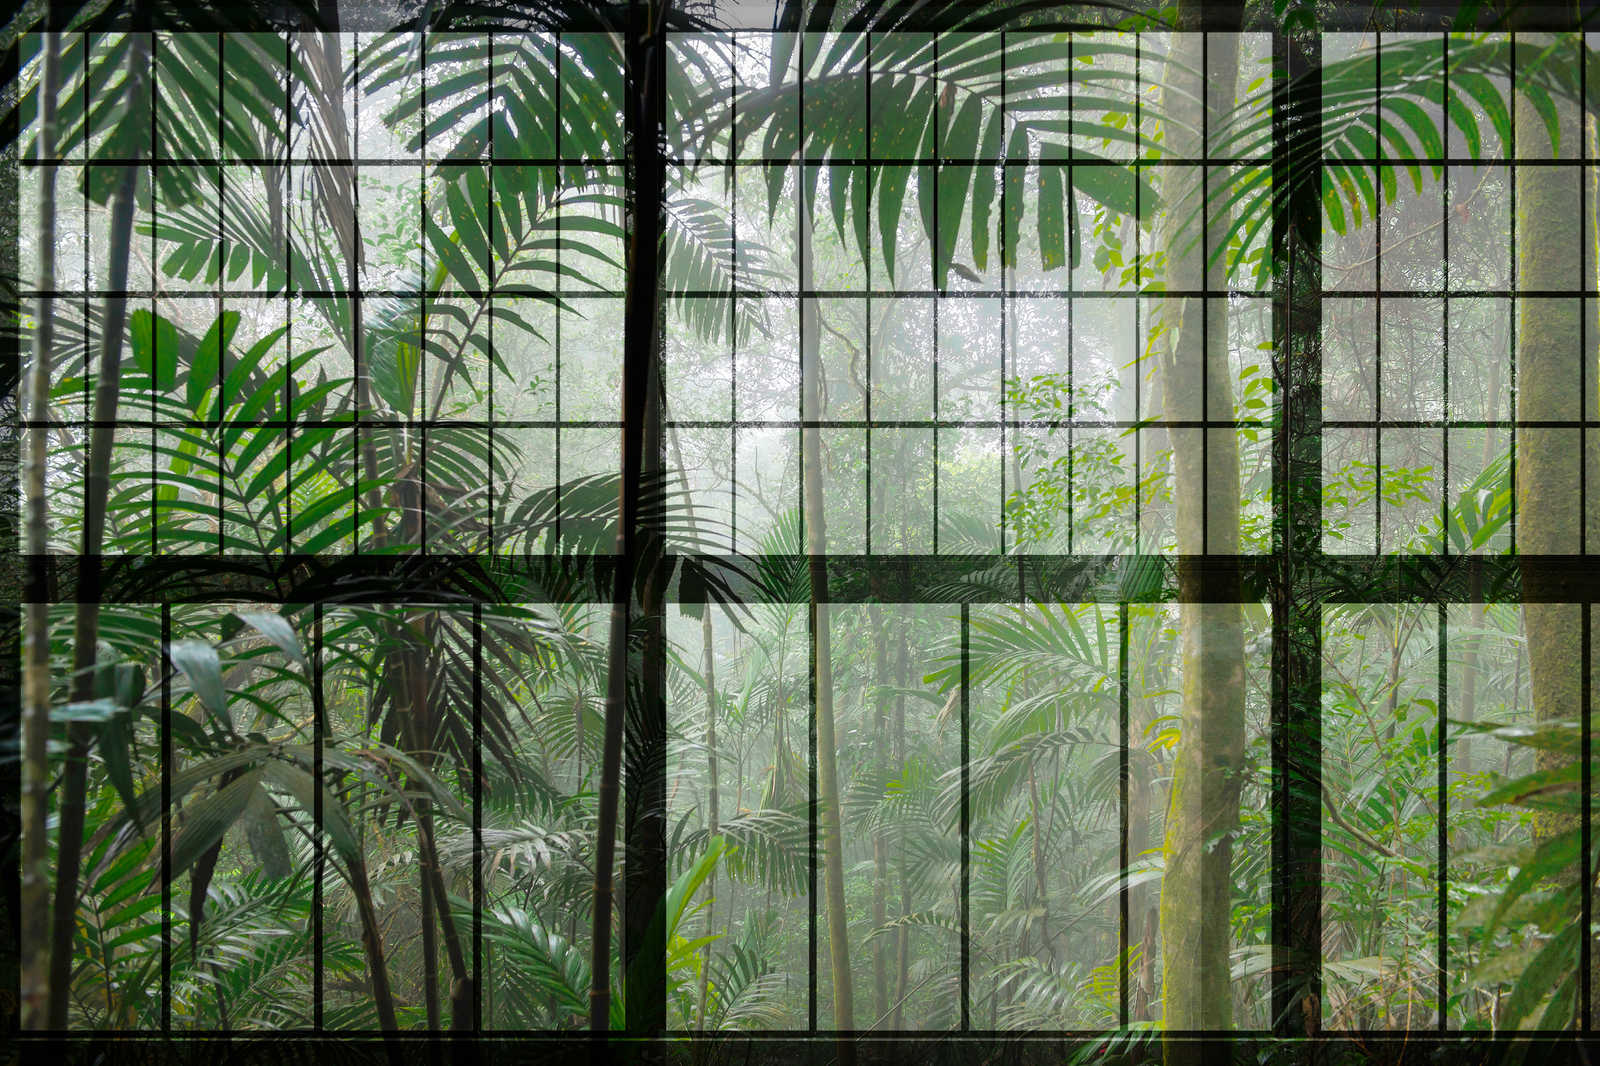             Rainforest 1 - Loftfenster Leinwandbild mit Dschungel Aussicht – 0,90 m x 0,60 m
        